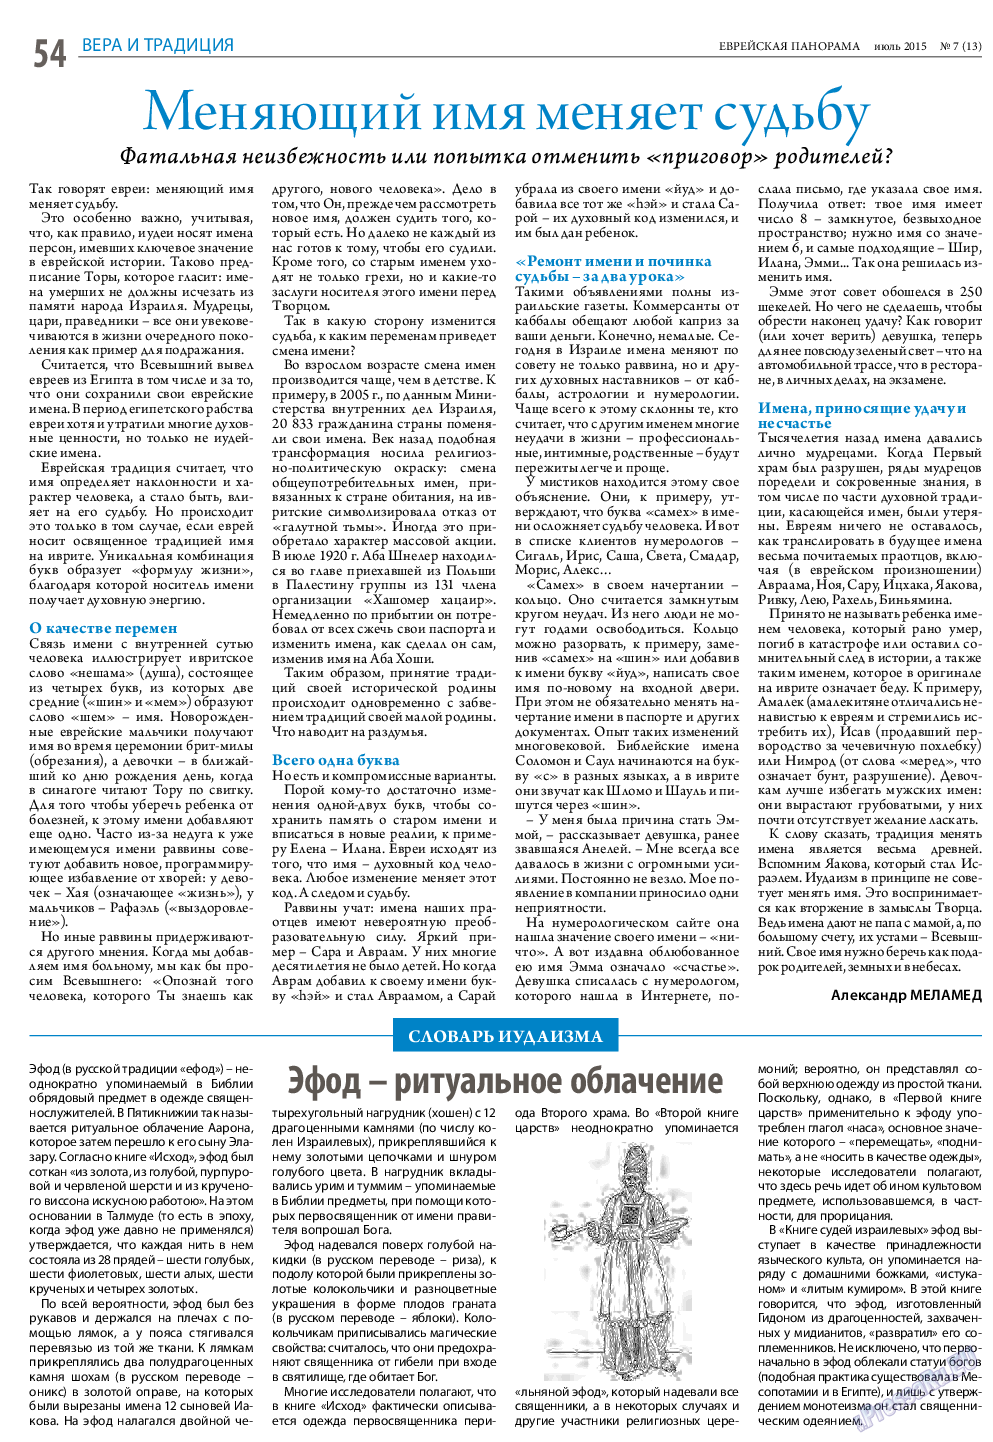 Еврейская панорама, газета. 2015 №7 стр.54